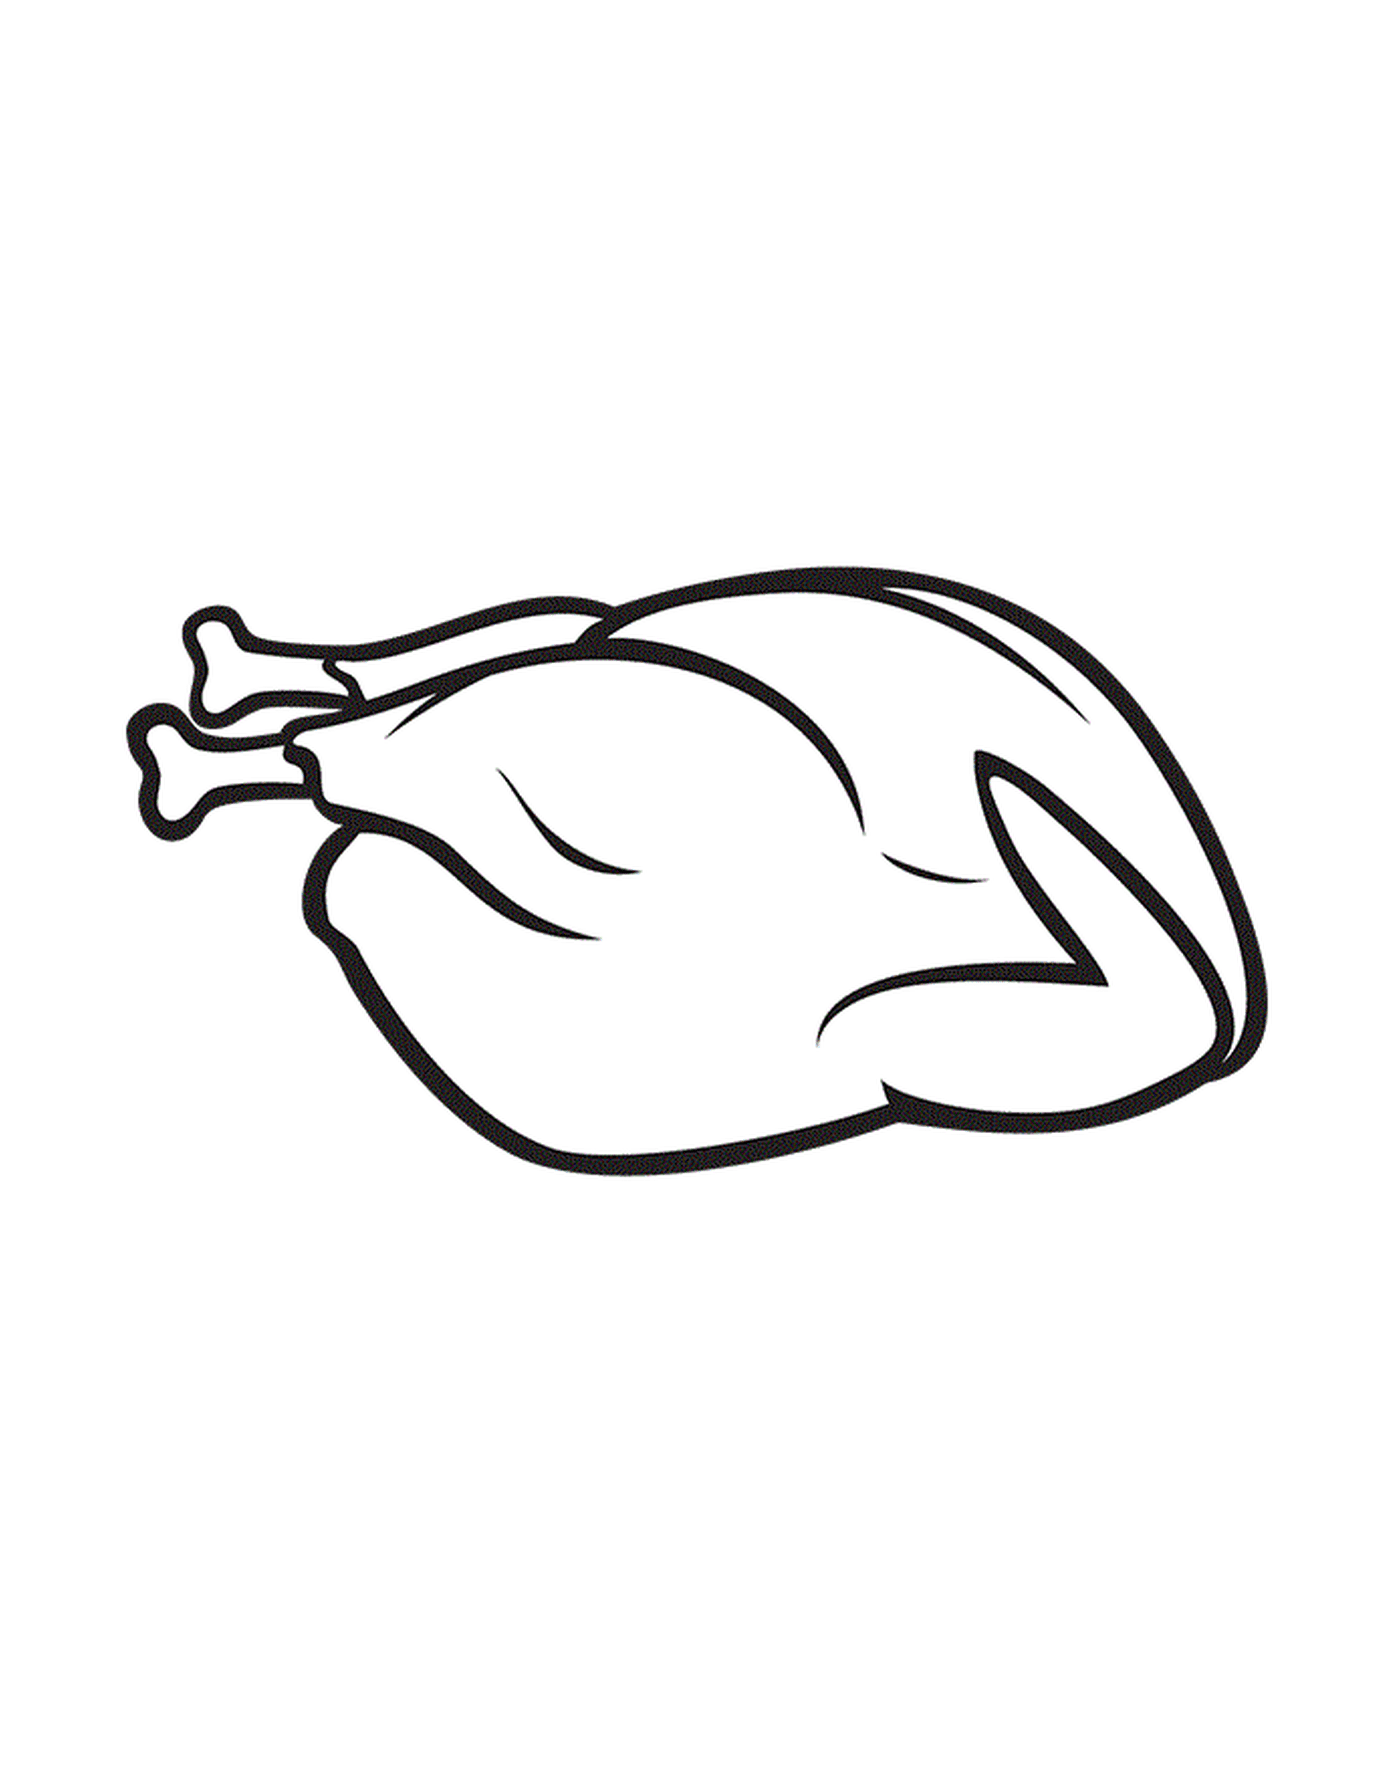  सफेद पृष्ठभूमि पर मुर्गी 